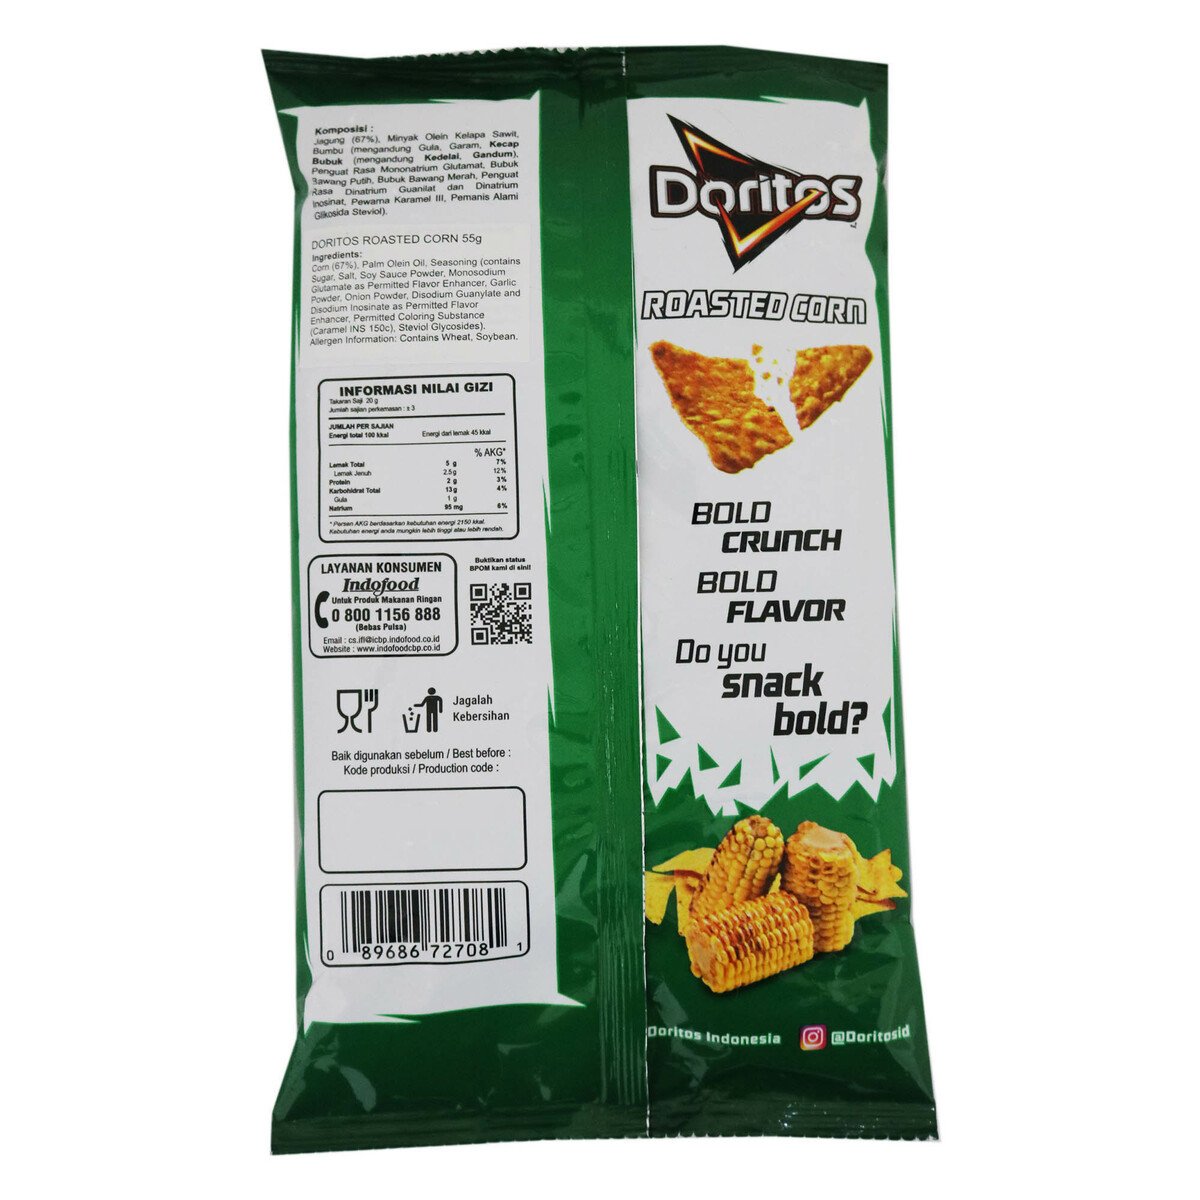 Doritos Roasted Corn 55g